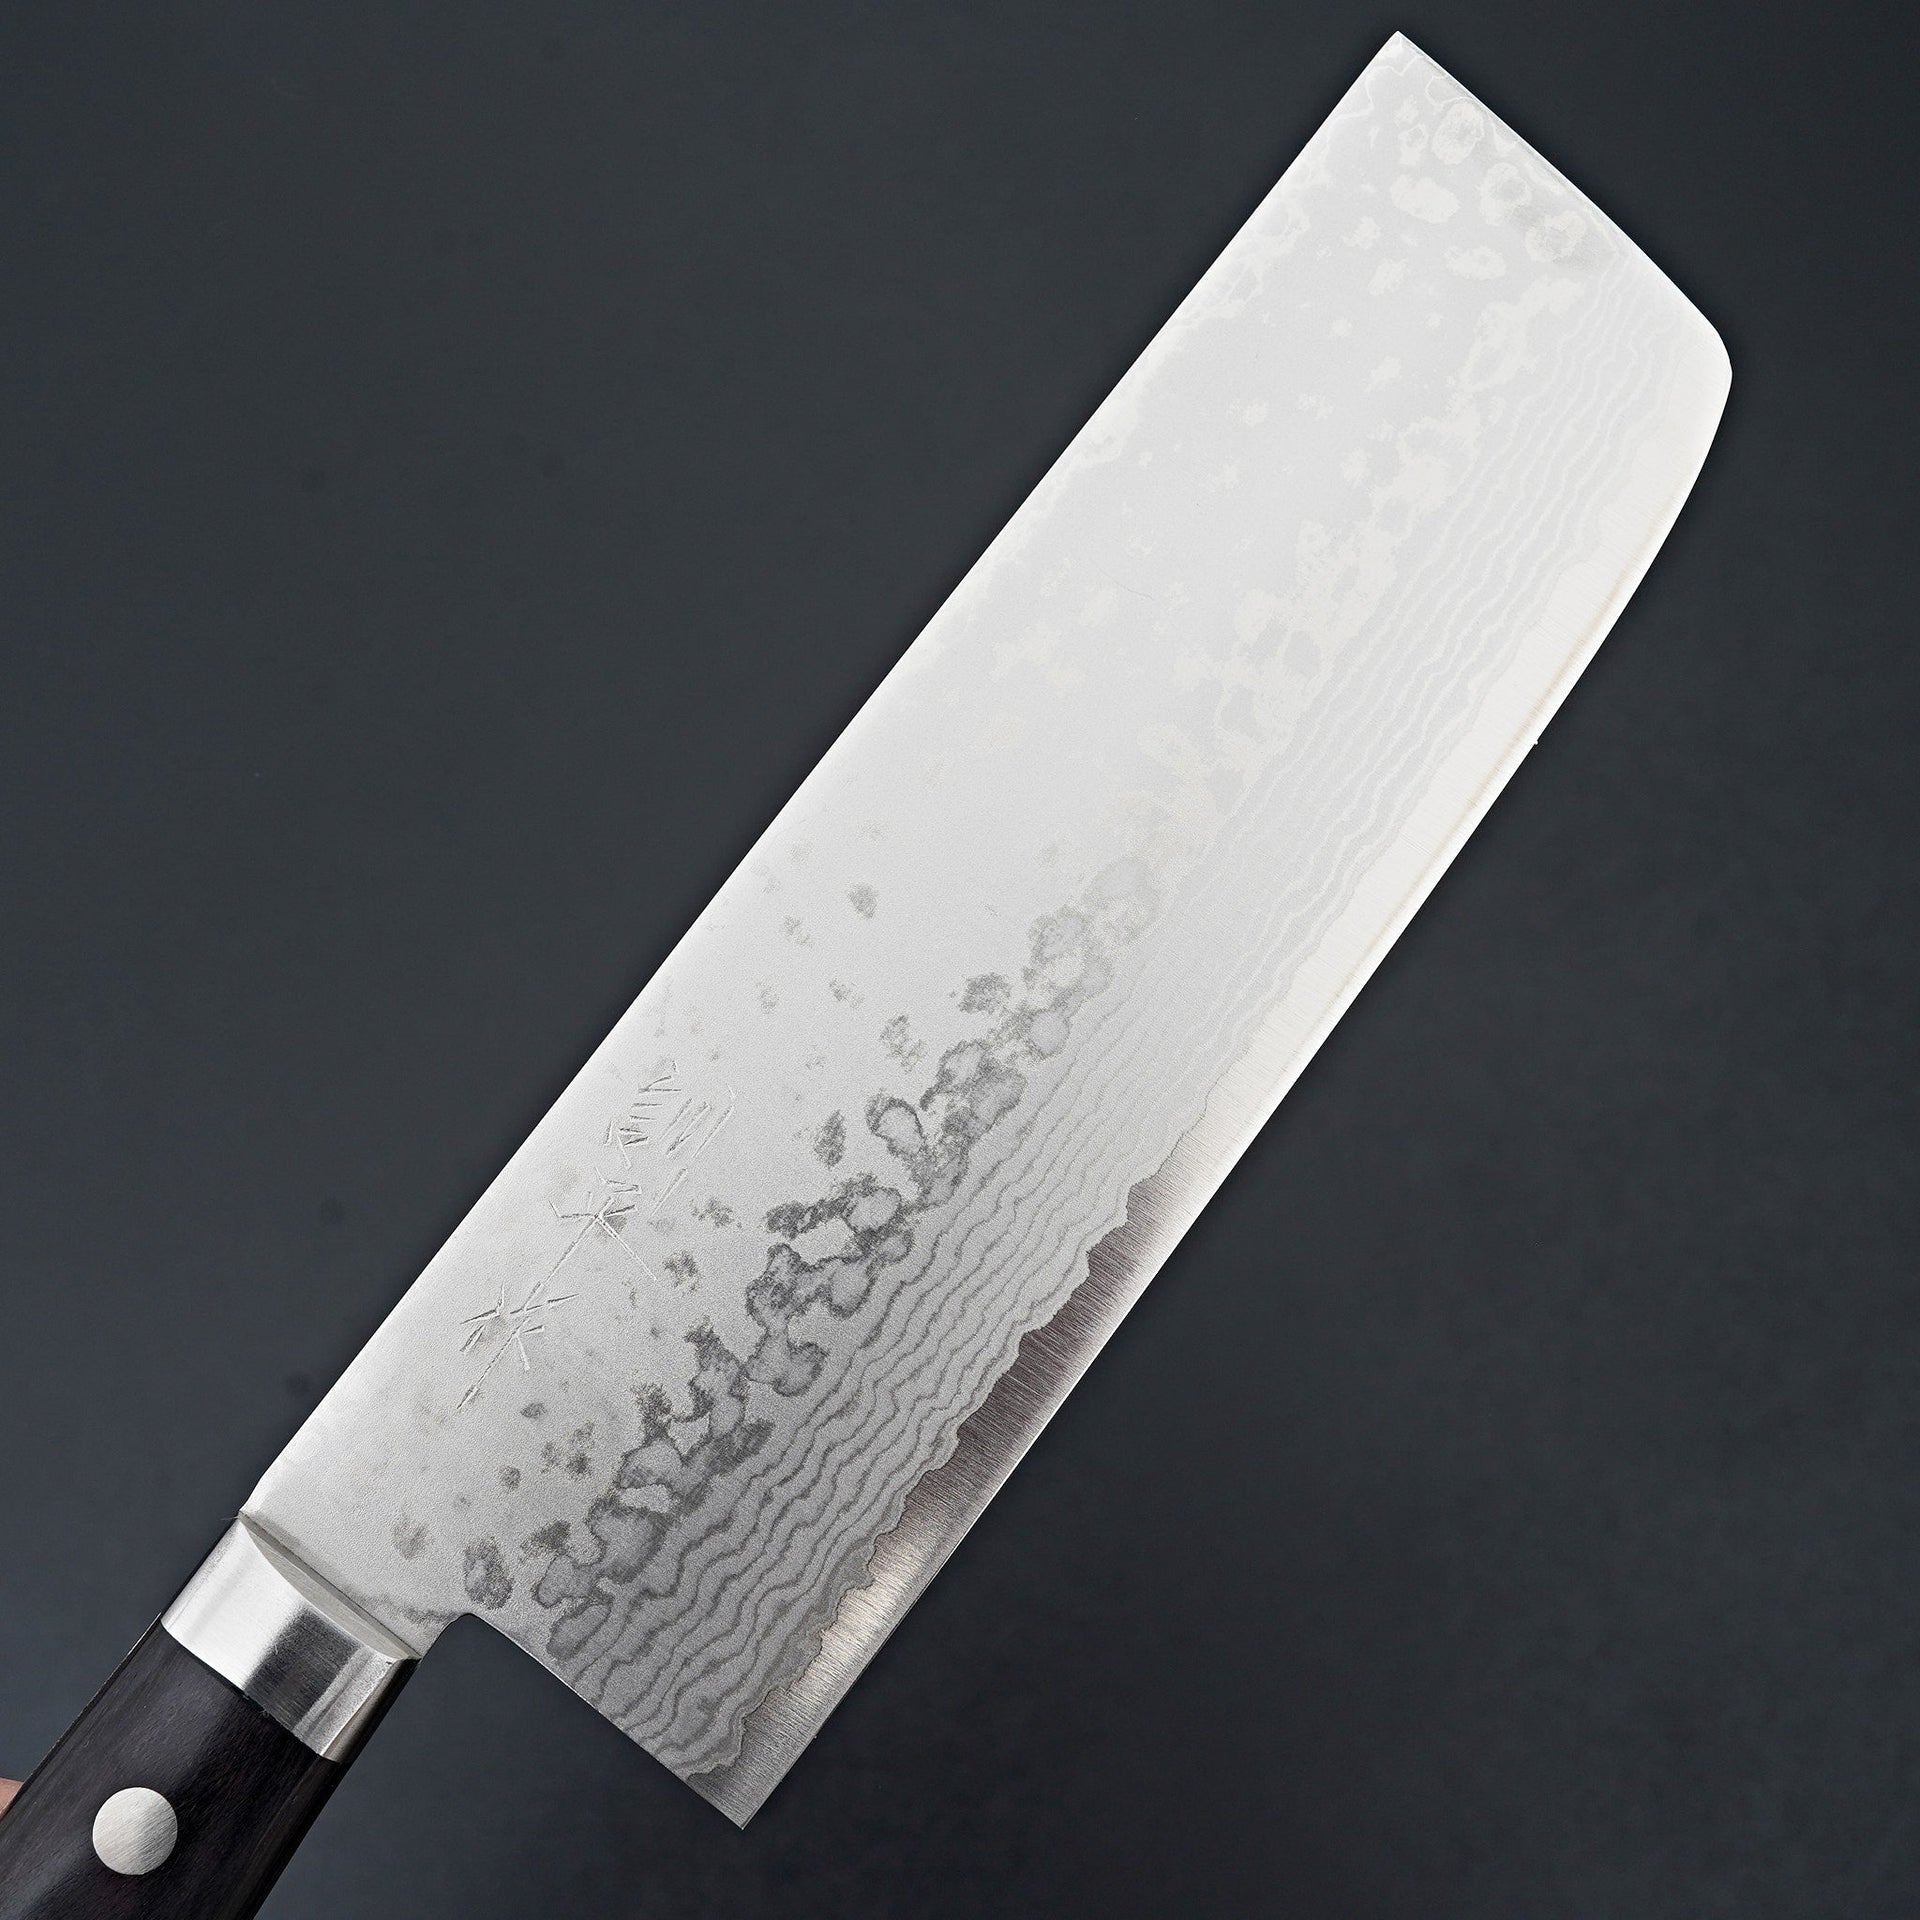 Masutani VG10 Damascus Nakiri 165mm-Knife-Masutani-Carbon Knife Co